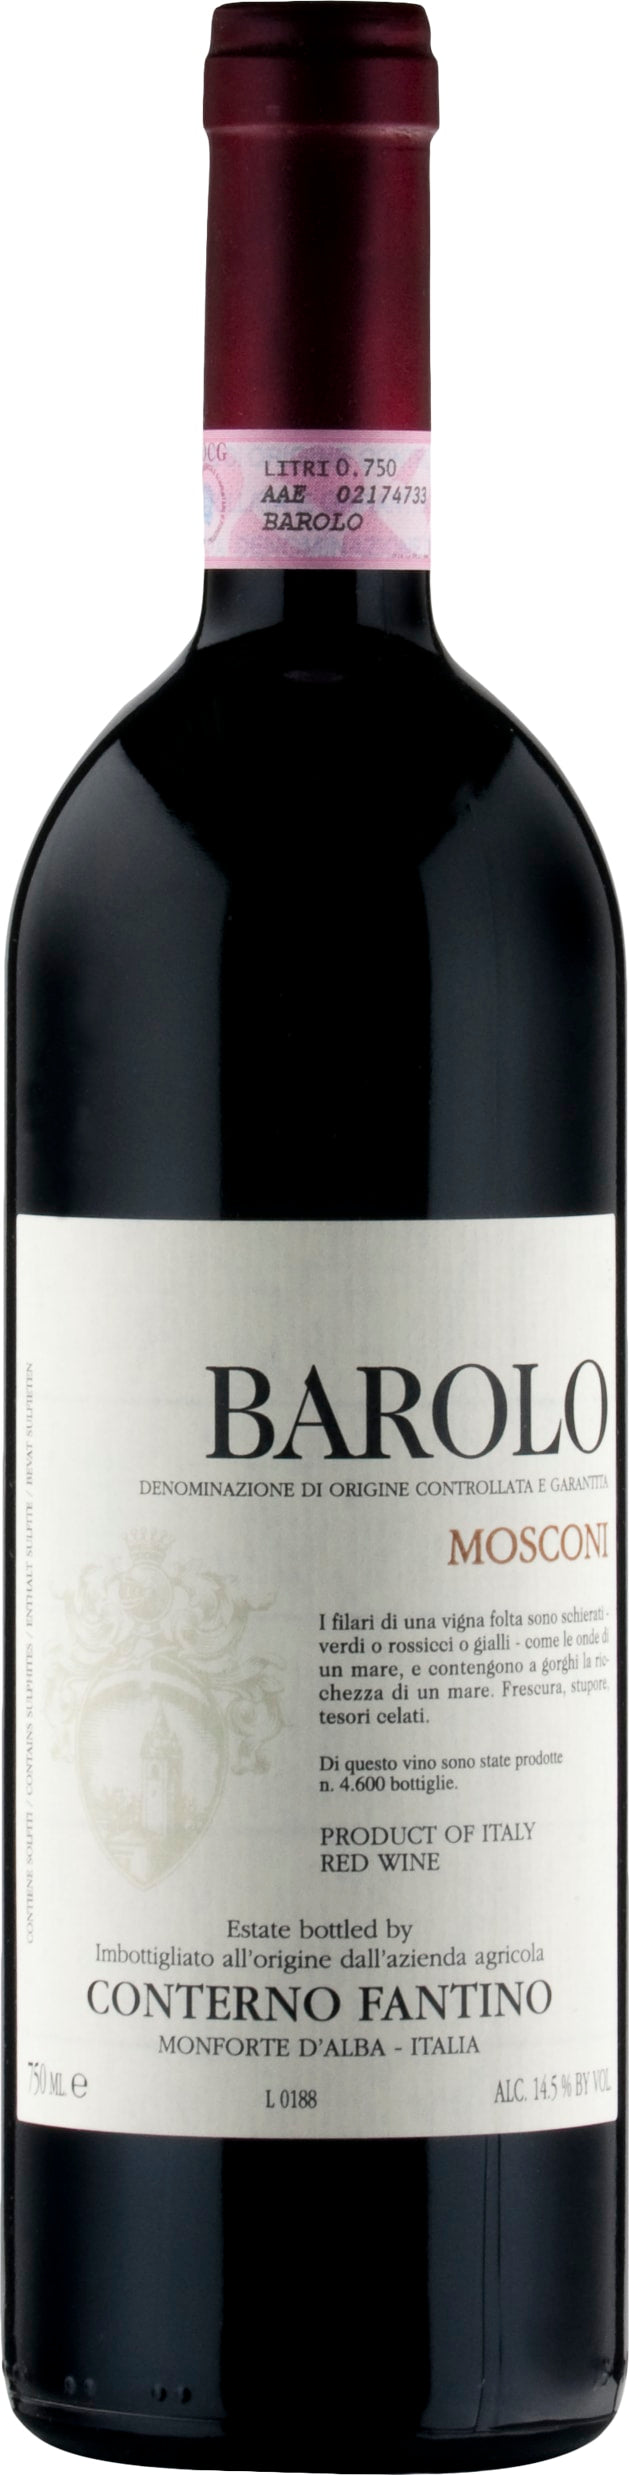 Conterno Fantino Barolo, Mosconi Vigna Ped 2017 75cl - Buy Conterno Fantino Wines from GREAT WINES DIRECT wine shop